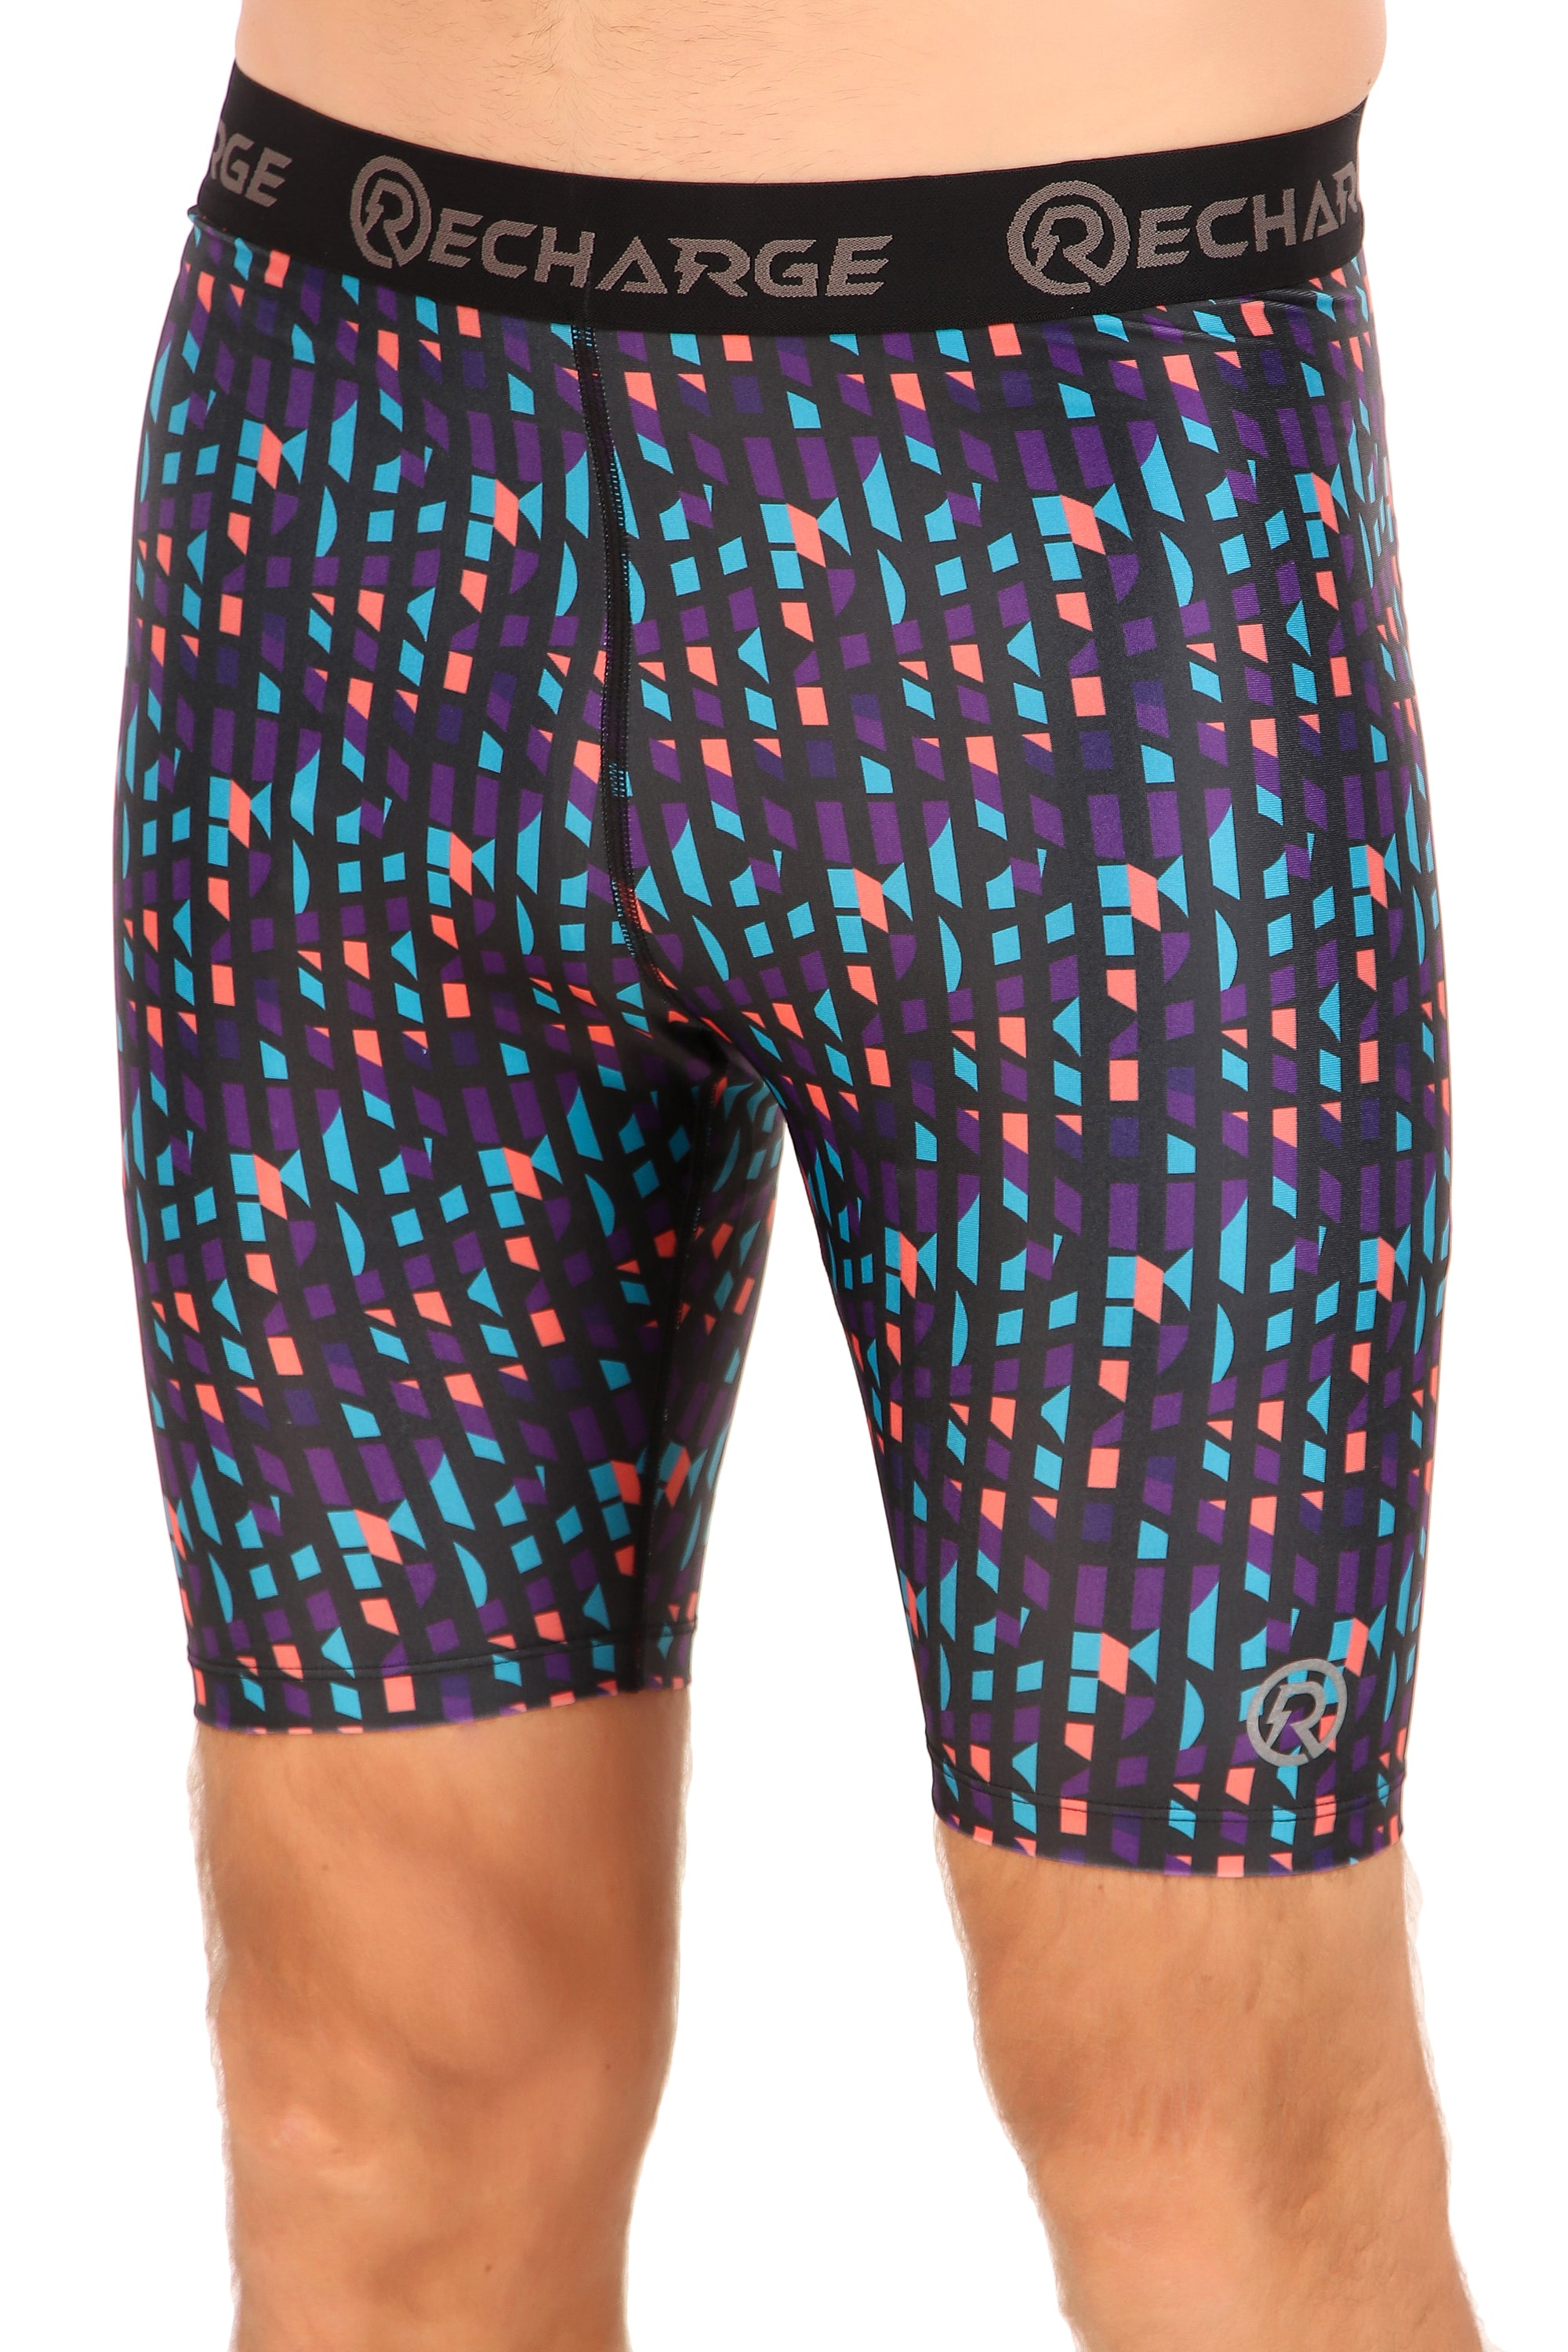 Men's Polyester Compression Shorts (Multimatrix)